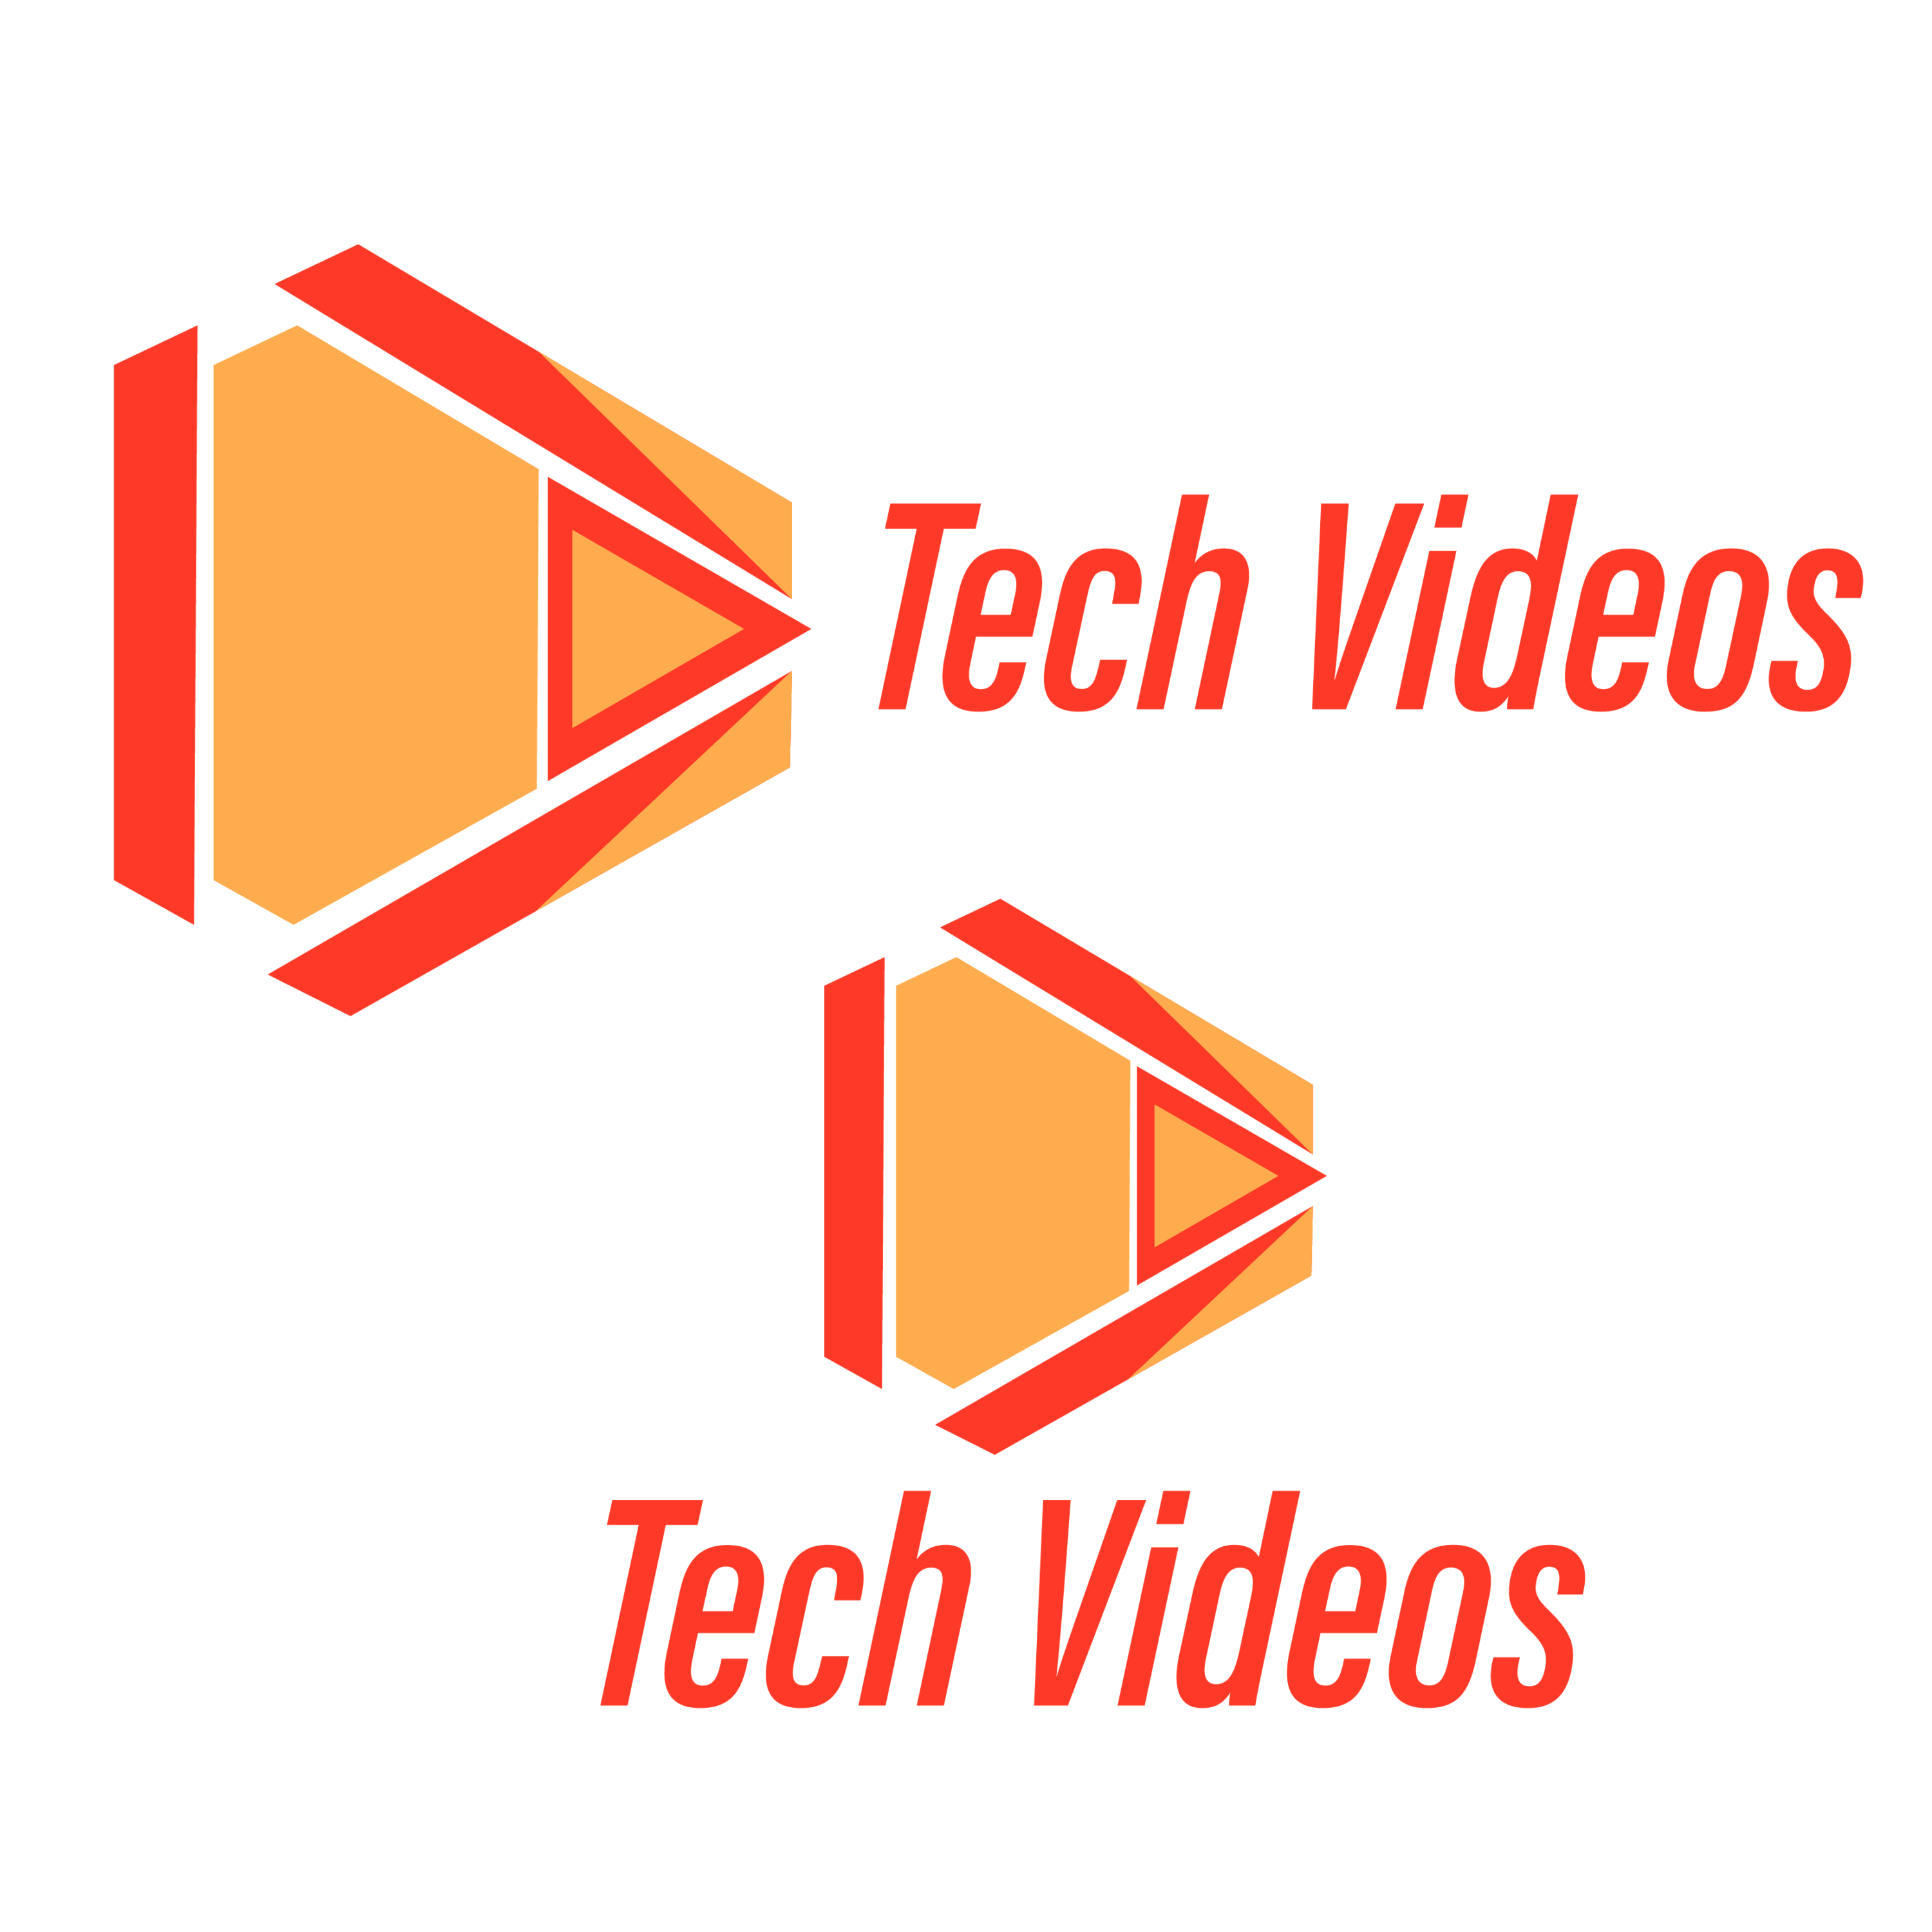 Video Icon Logo cover image.